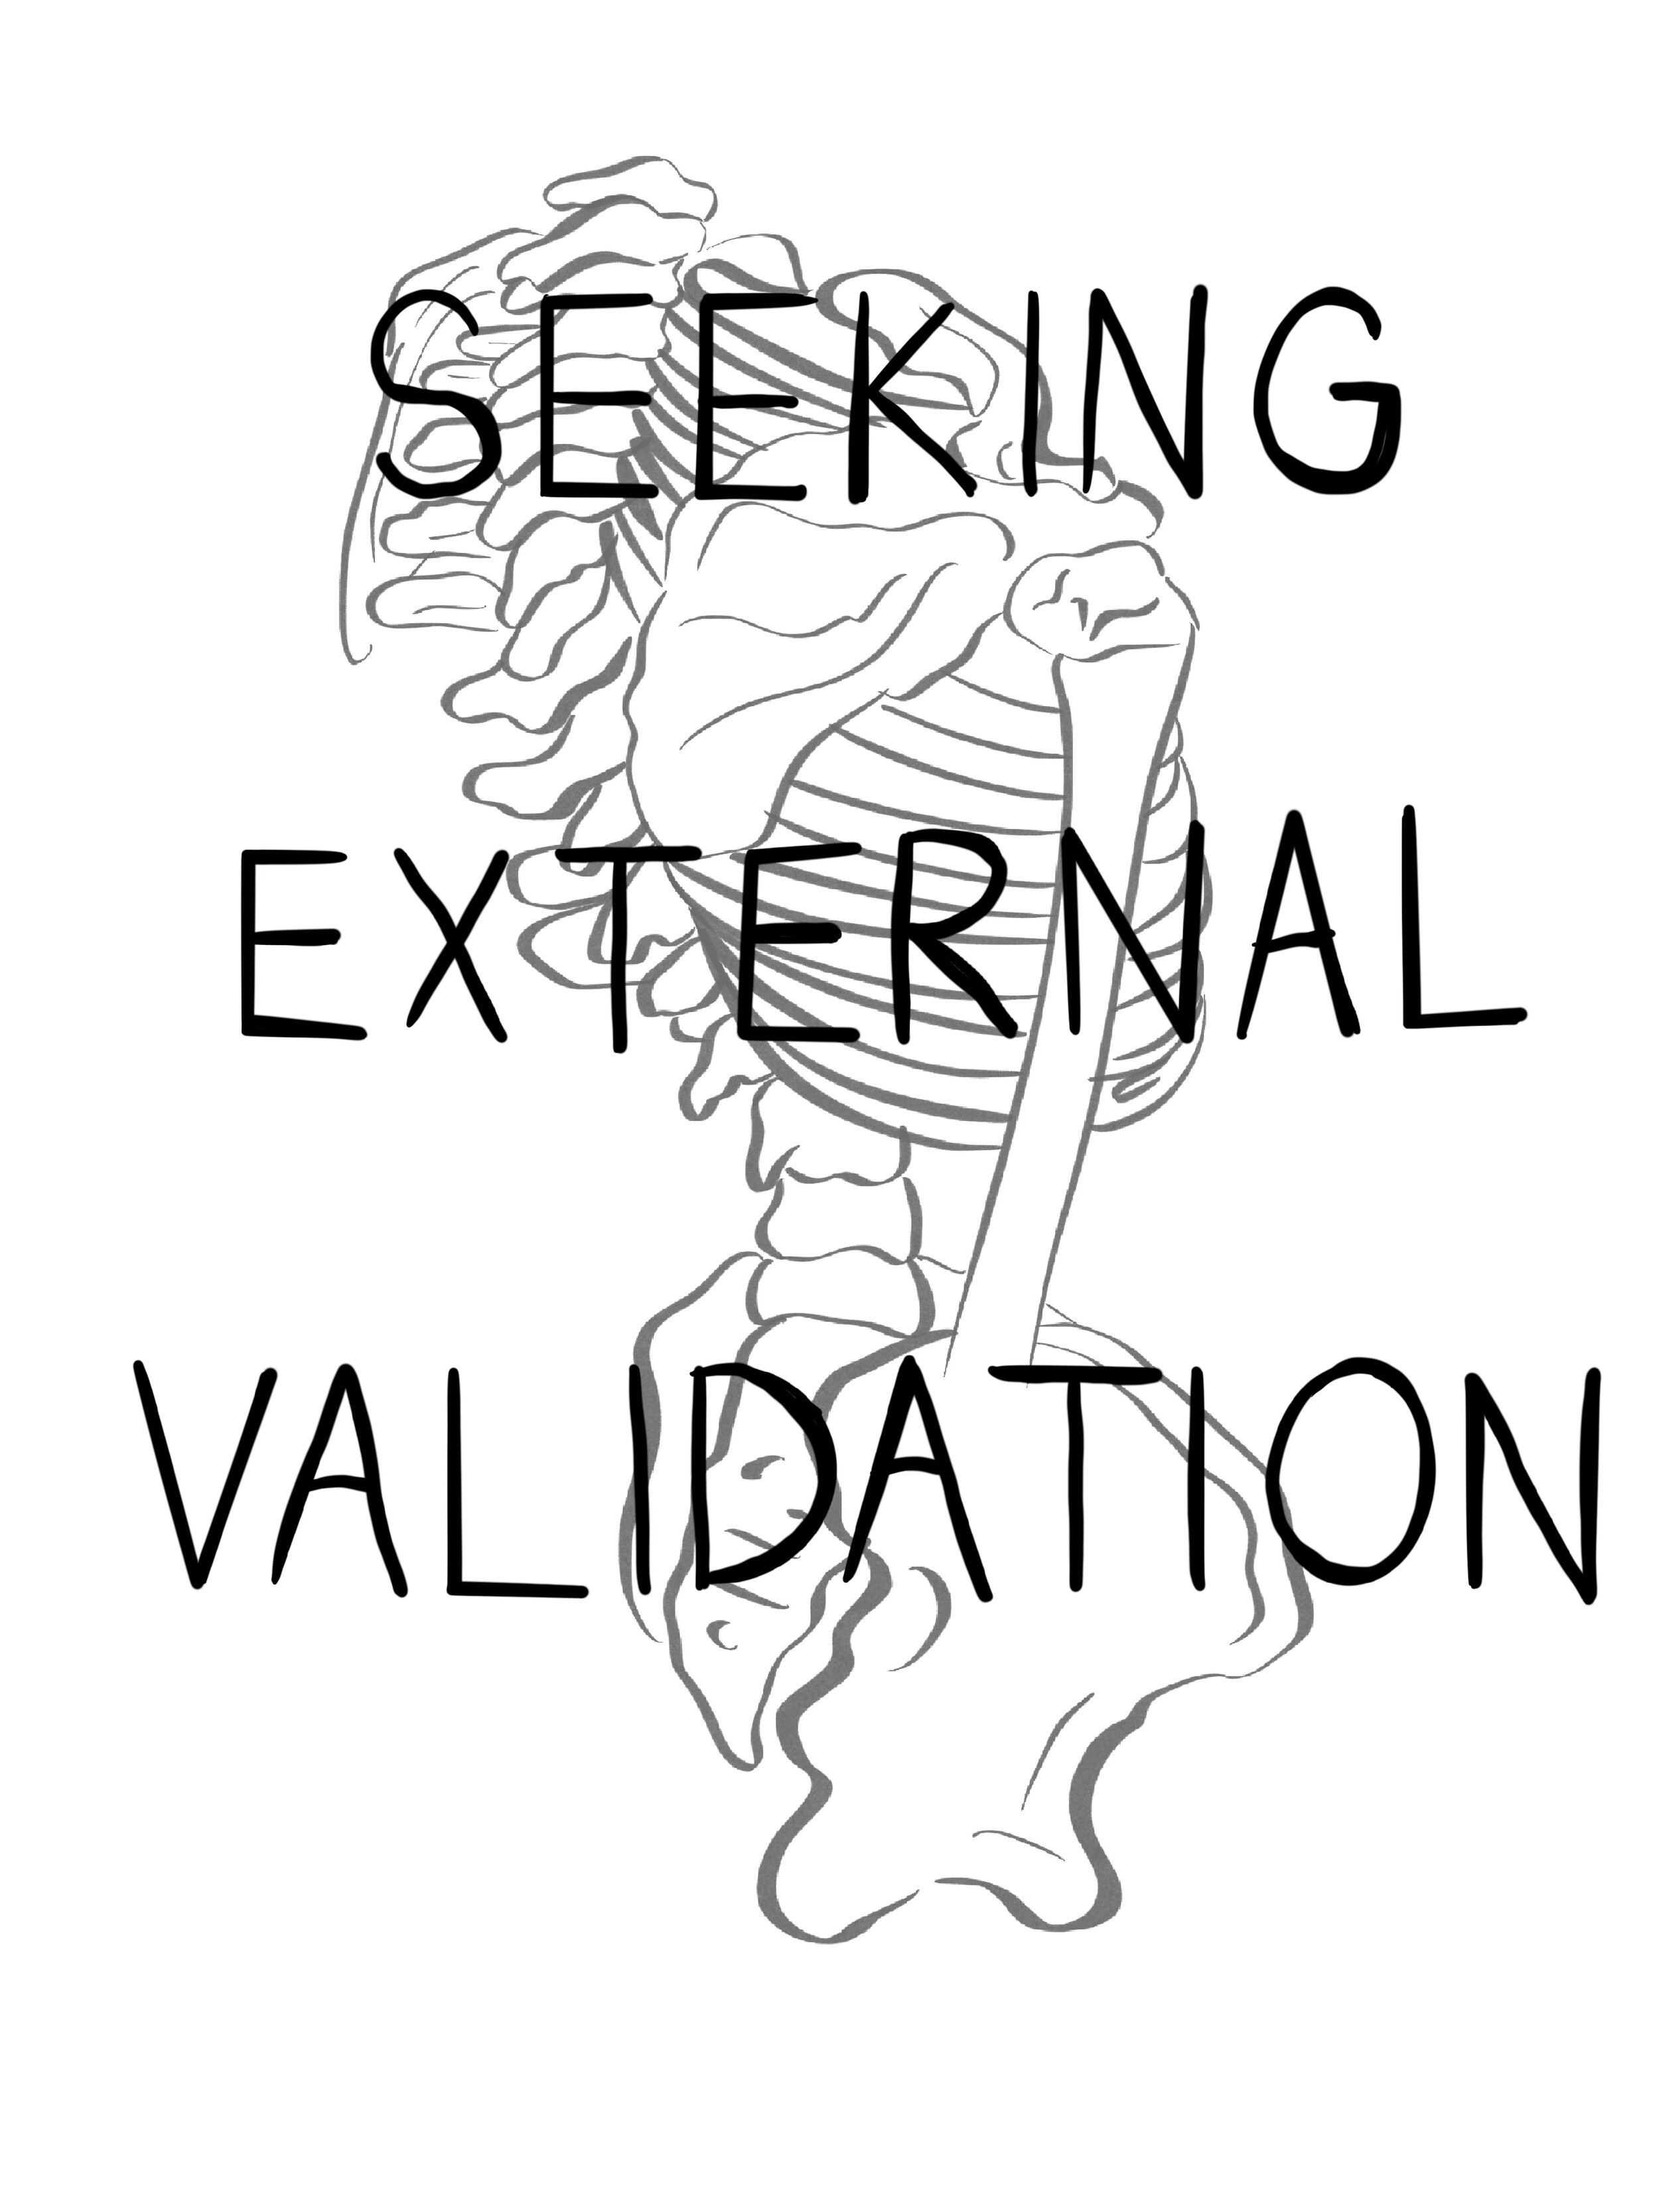 Seeking external validation